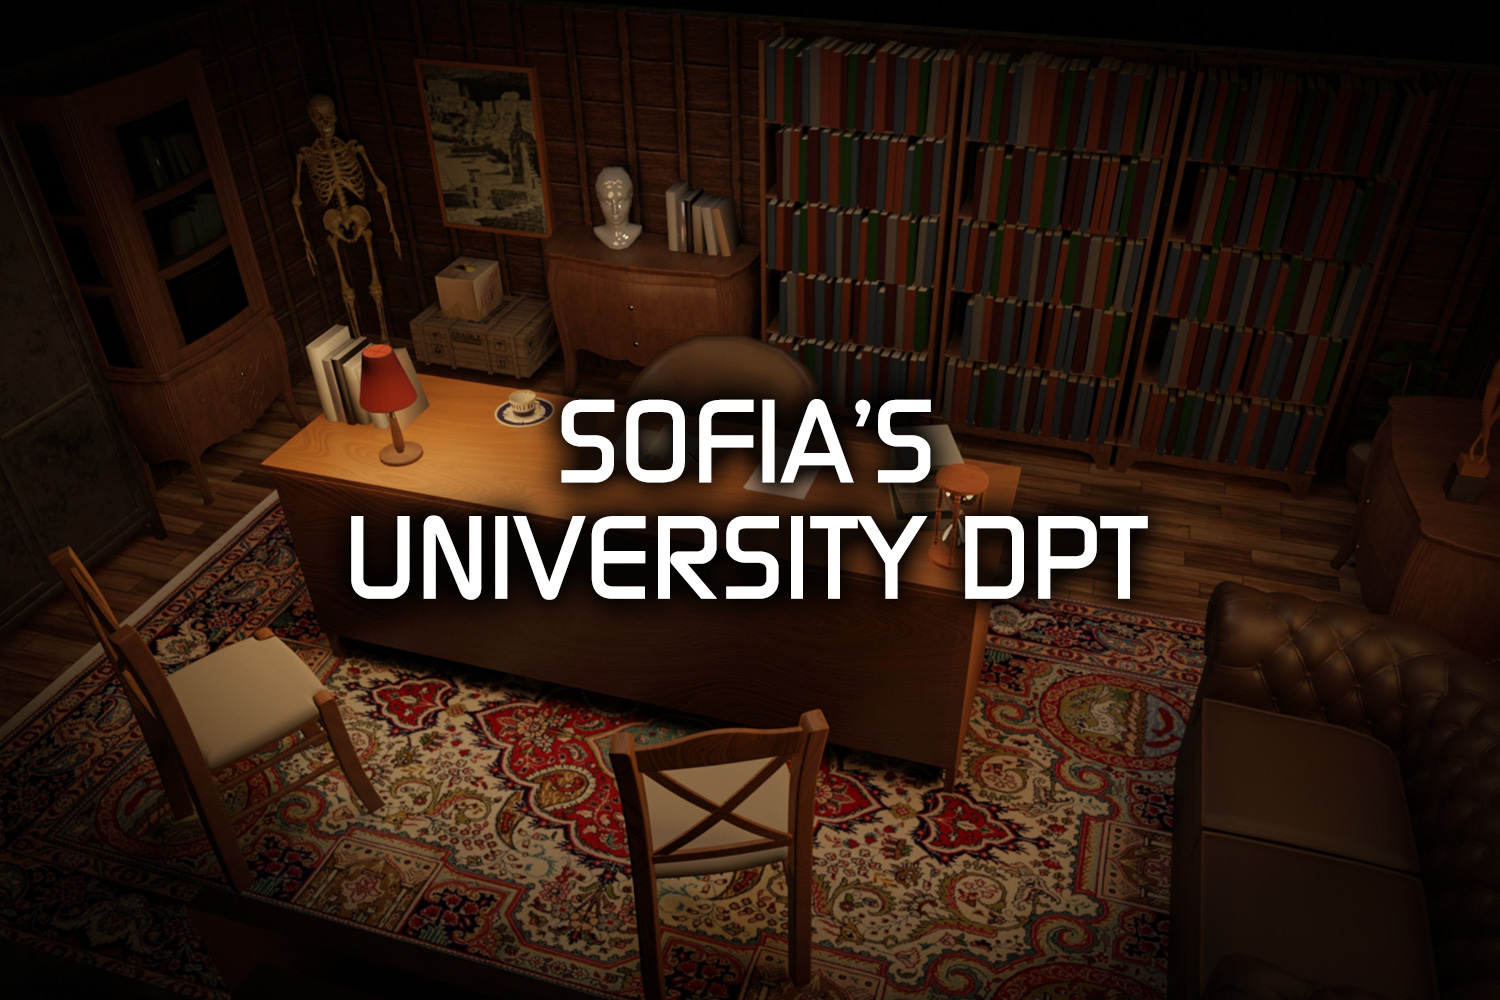 SOFIA’S UNIVERSITY DPT